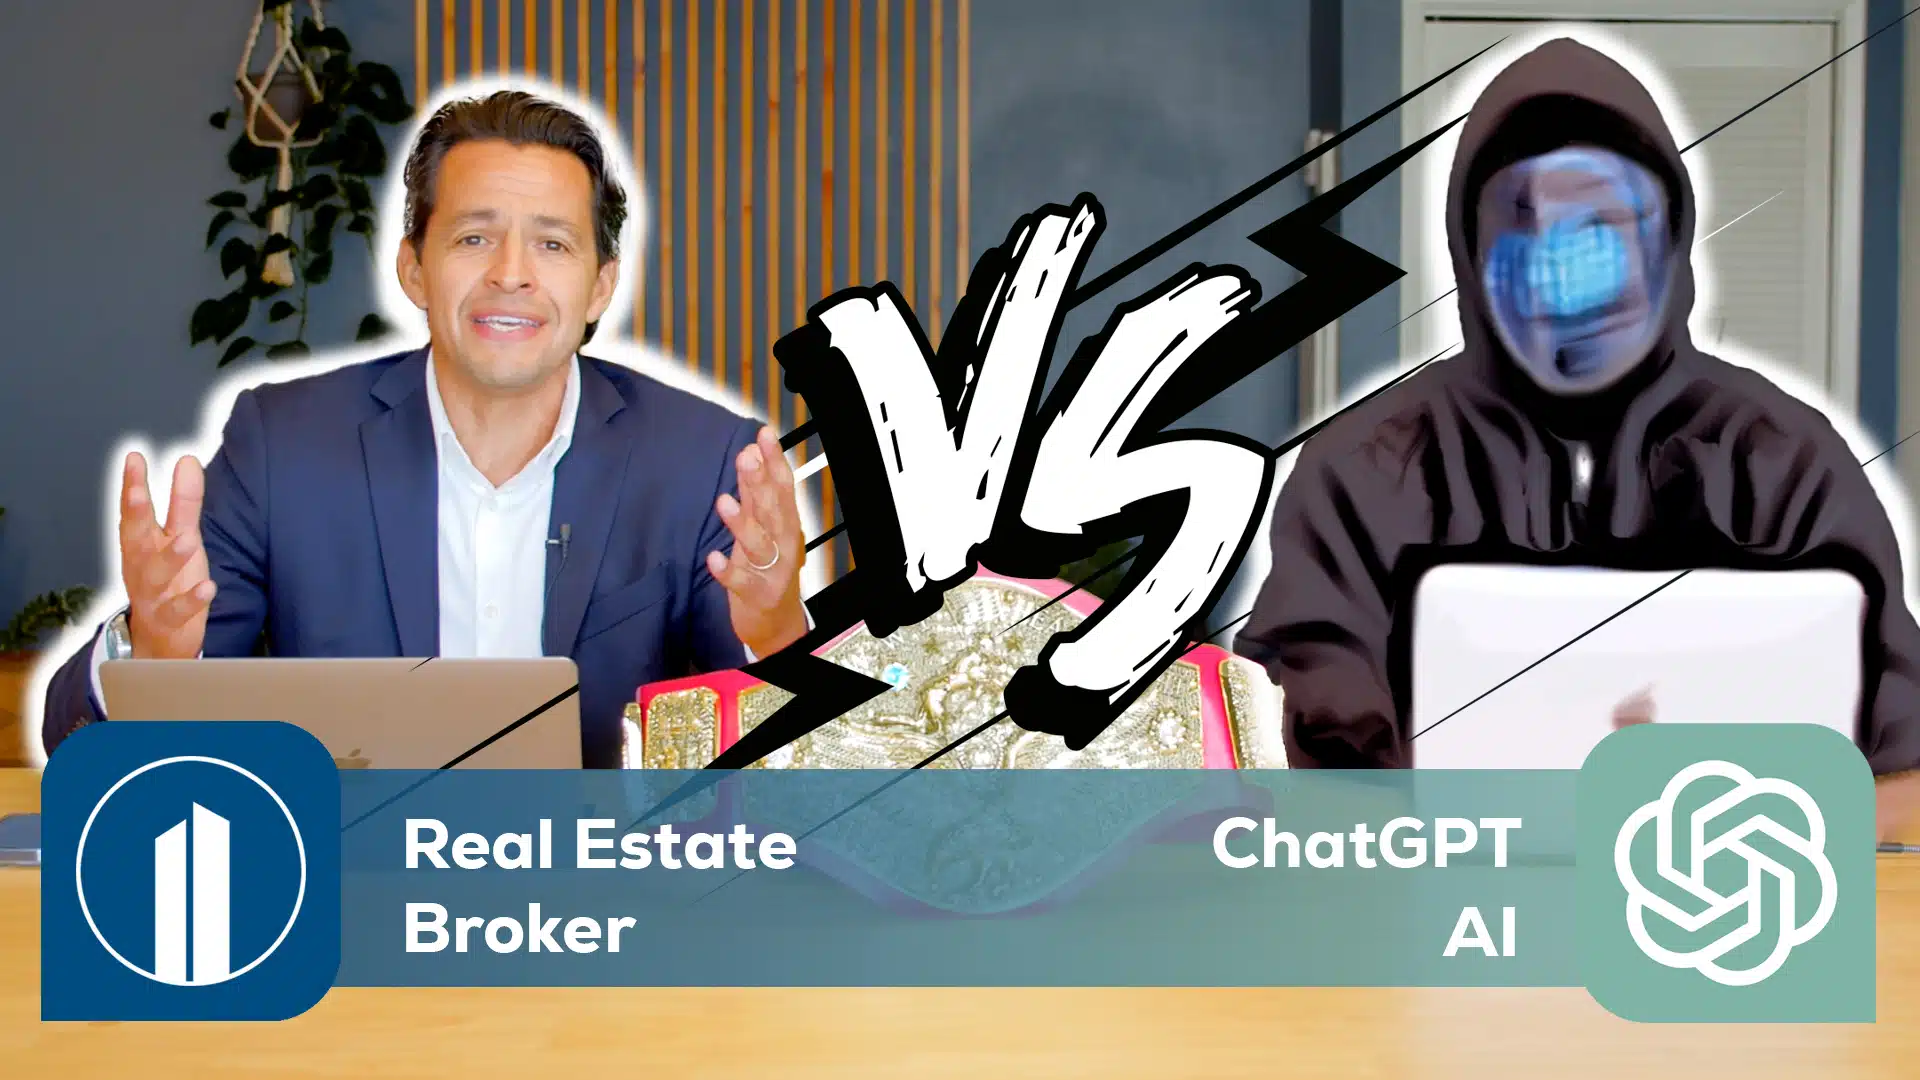 Broker vs. ChatGPT illustration